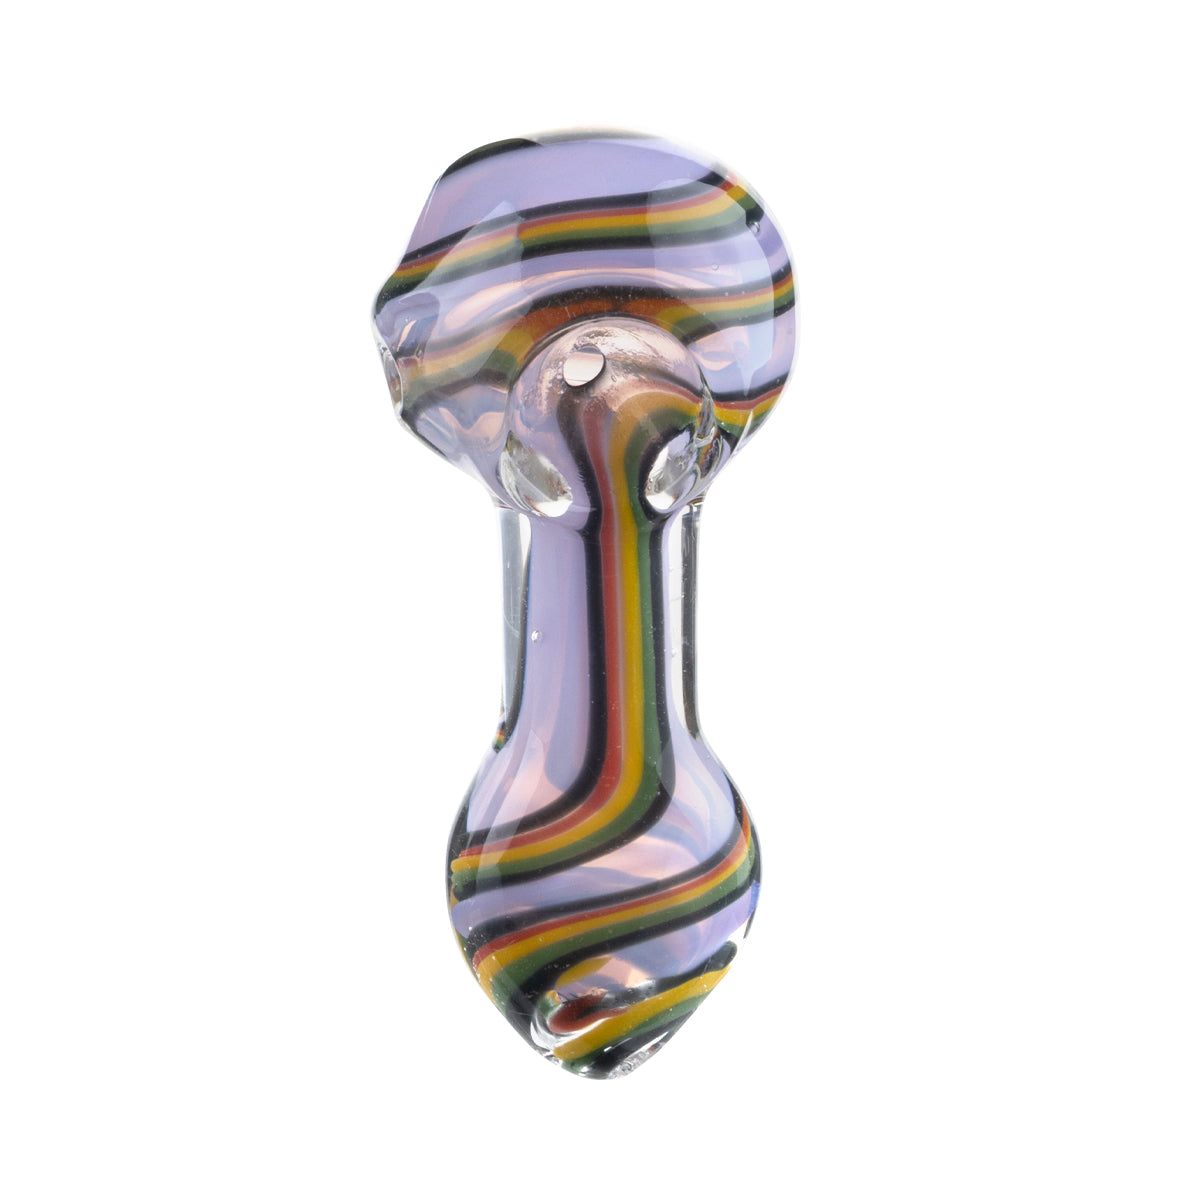 Hand Pipe | Classic Glass Spoon Hand Pipe | 3.5" - Slyme Rasta Swirl - 3 Count Glass Hand Pipe Biohazard Inc   